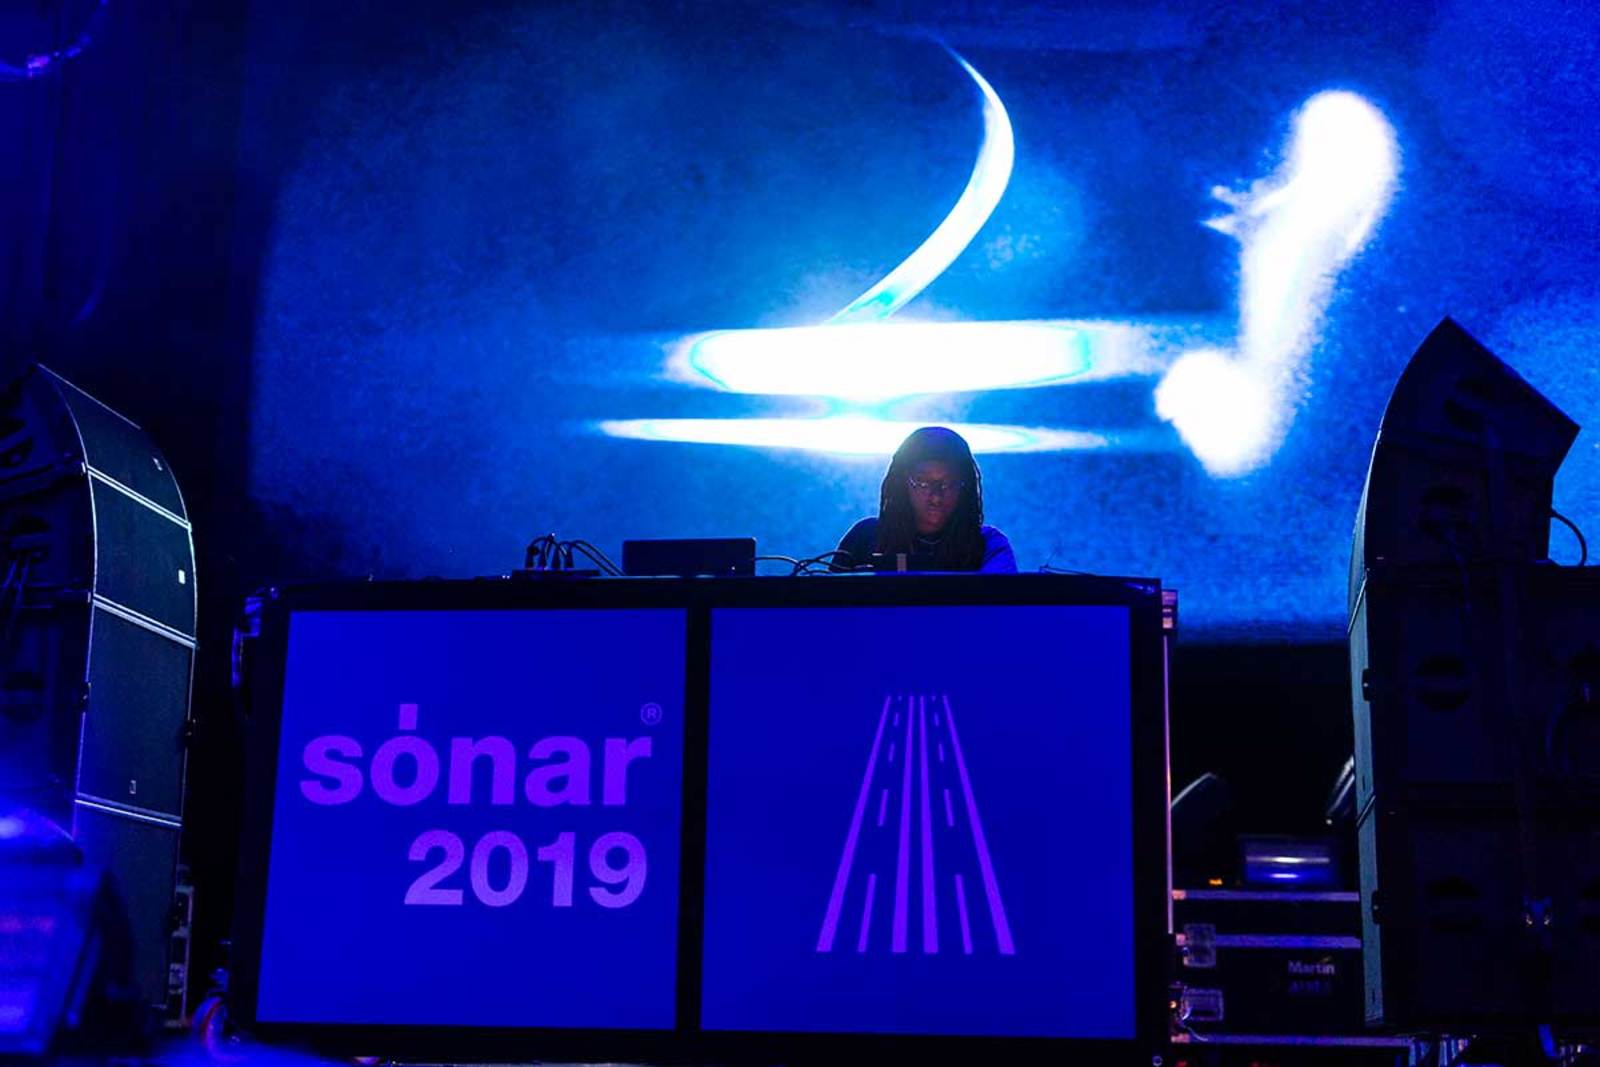 jlin-sonarlab-sonar-2019.jpg